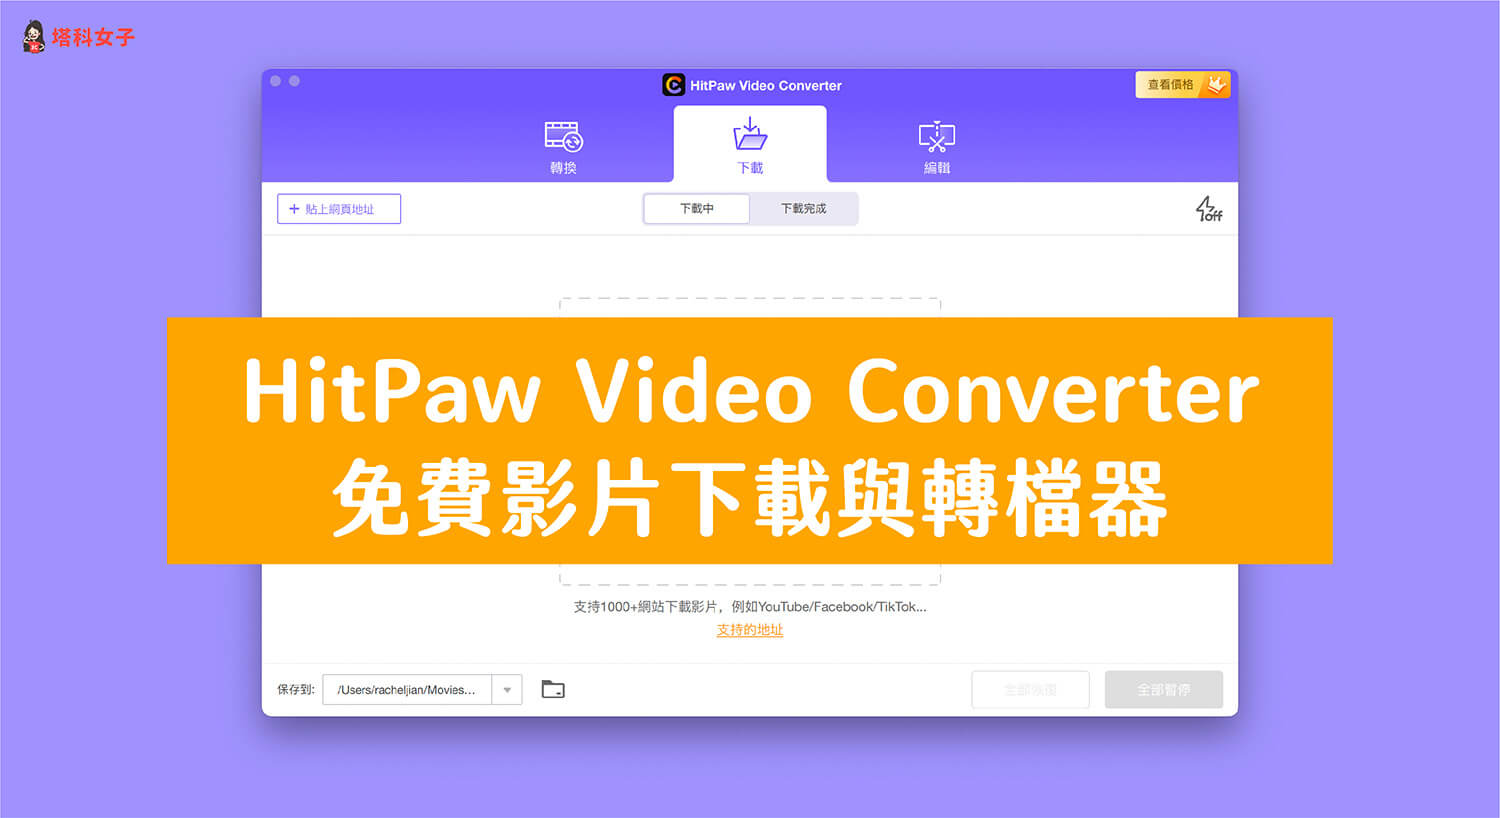 HitPaw Video Converter免費影片下載器/轉檔器，支援 Windows / Mac